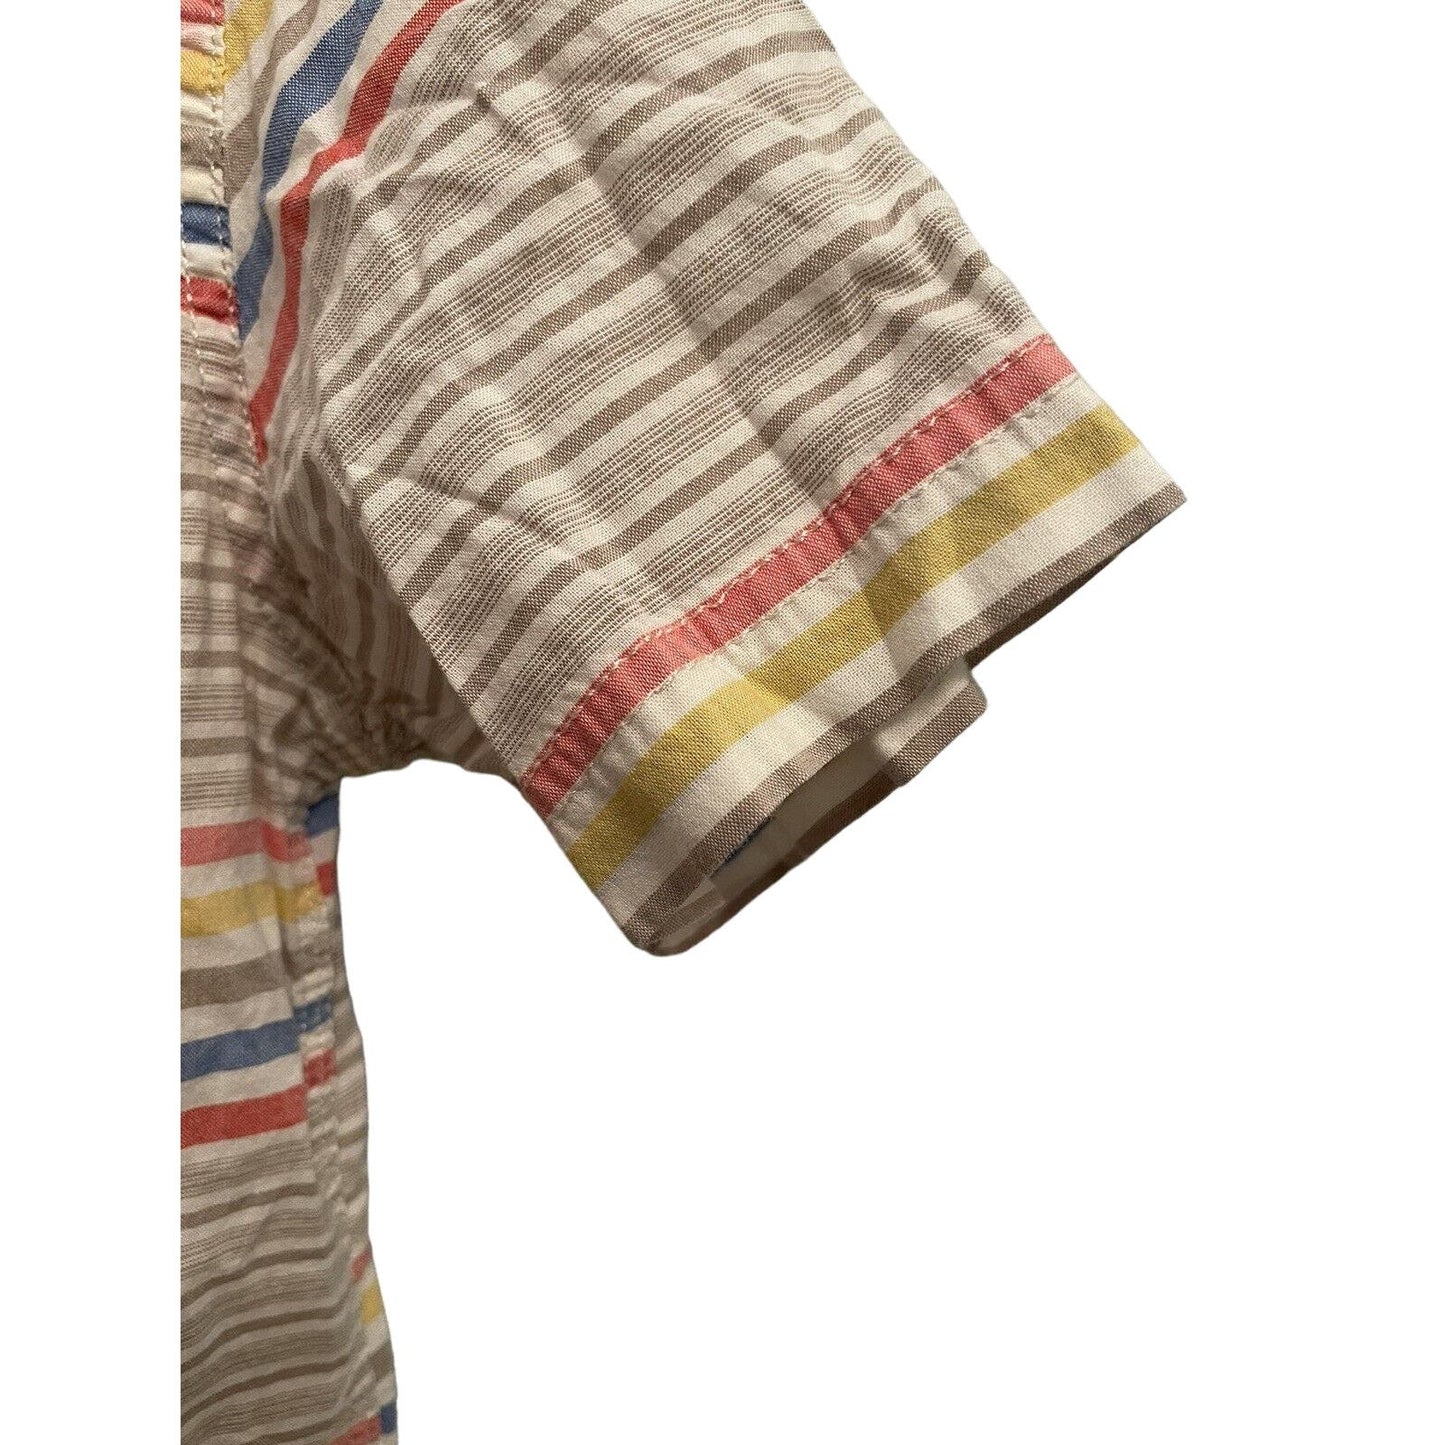 90s Vintage Tommy Hilfiger Men’s Medium Stripe Short Sleeve Button Up